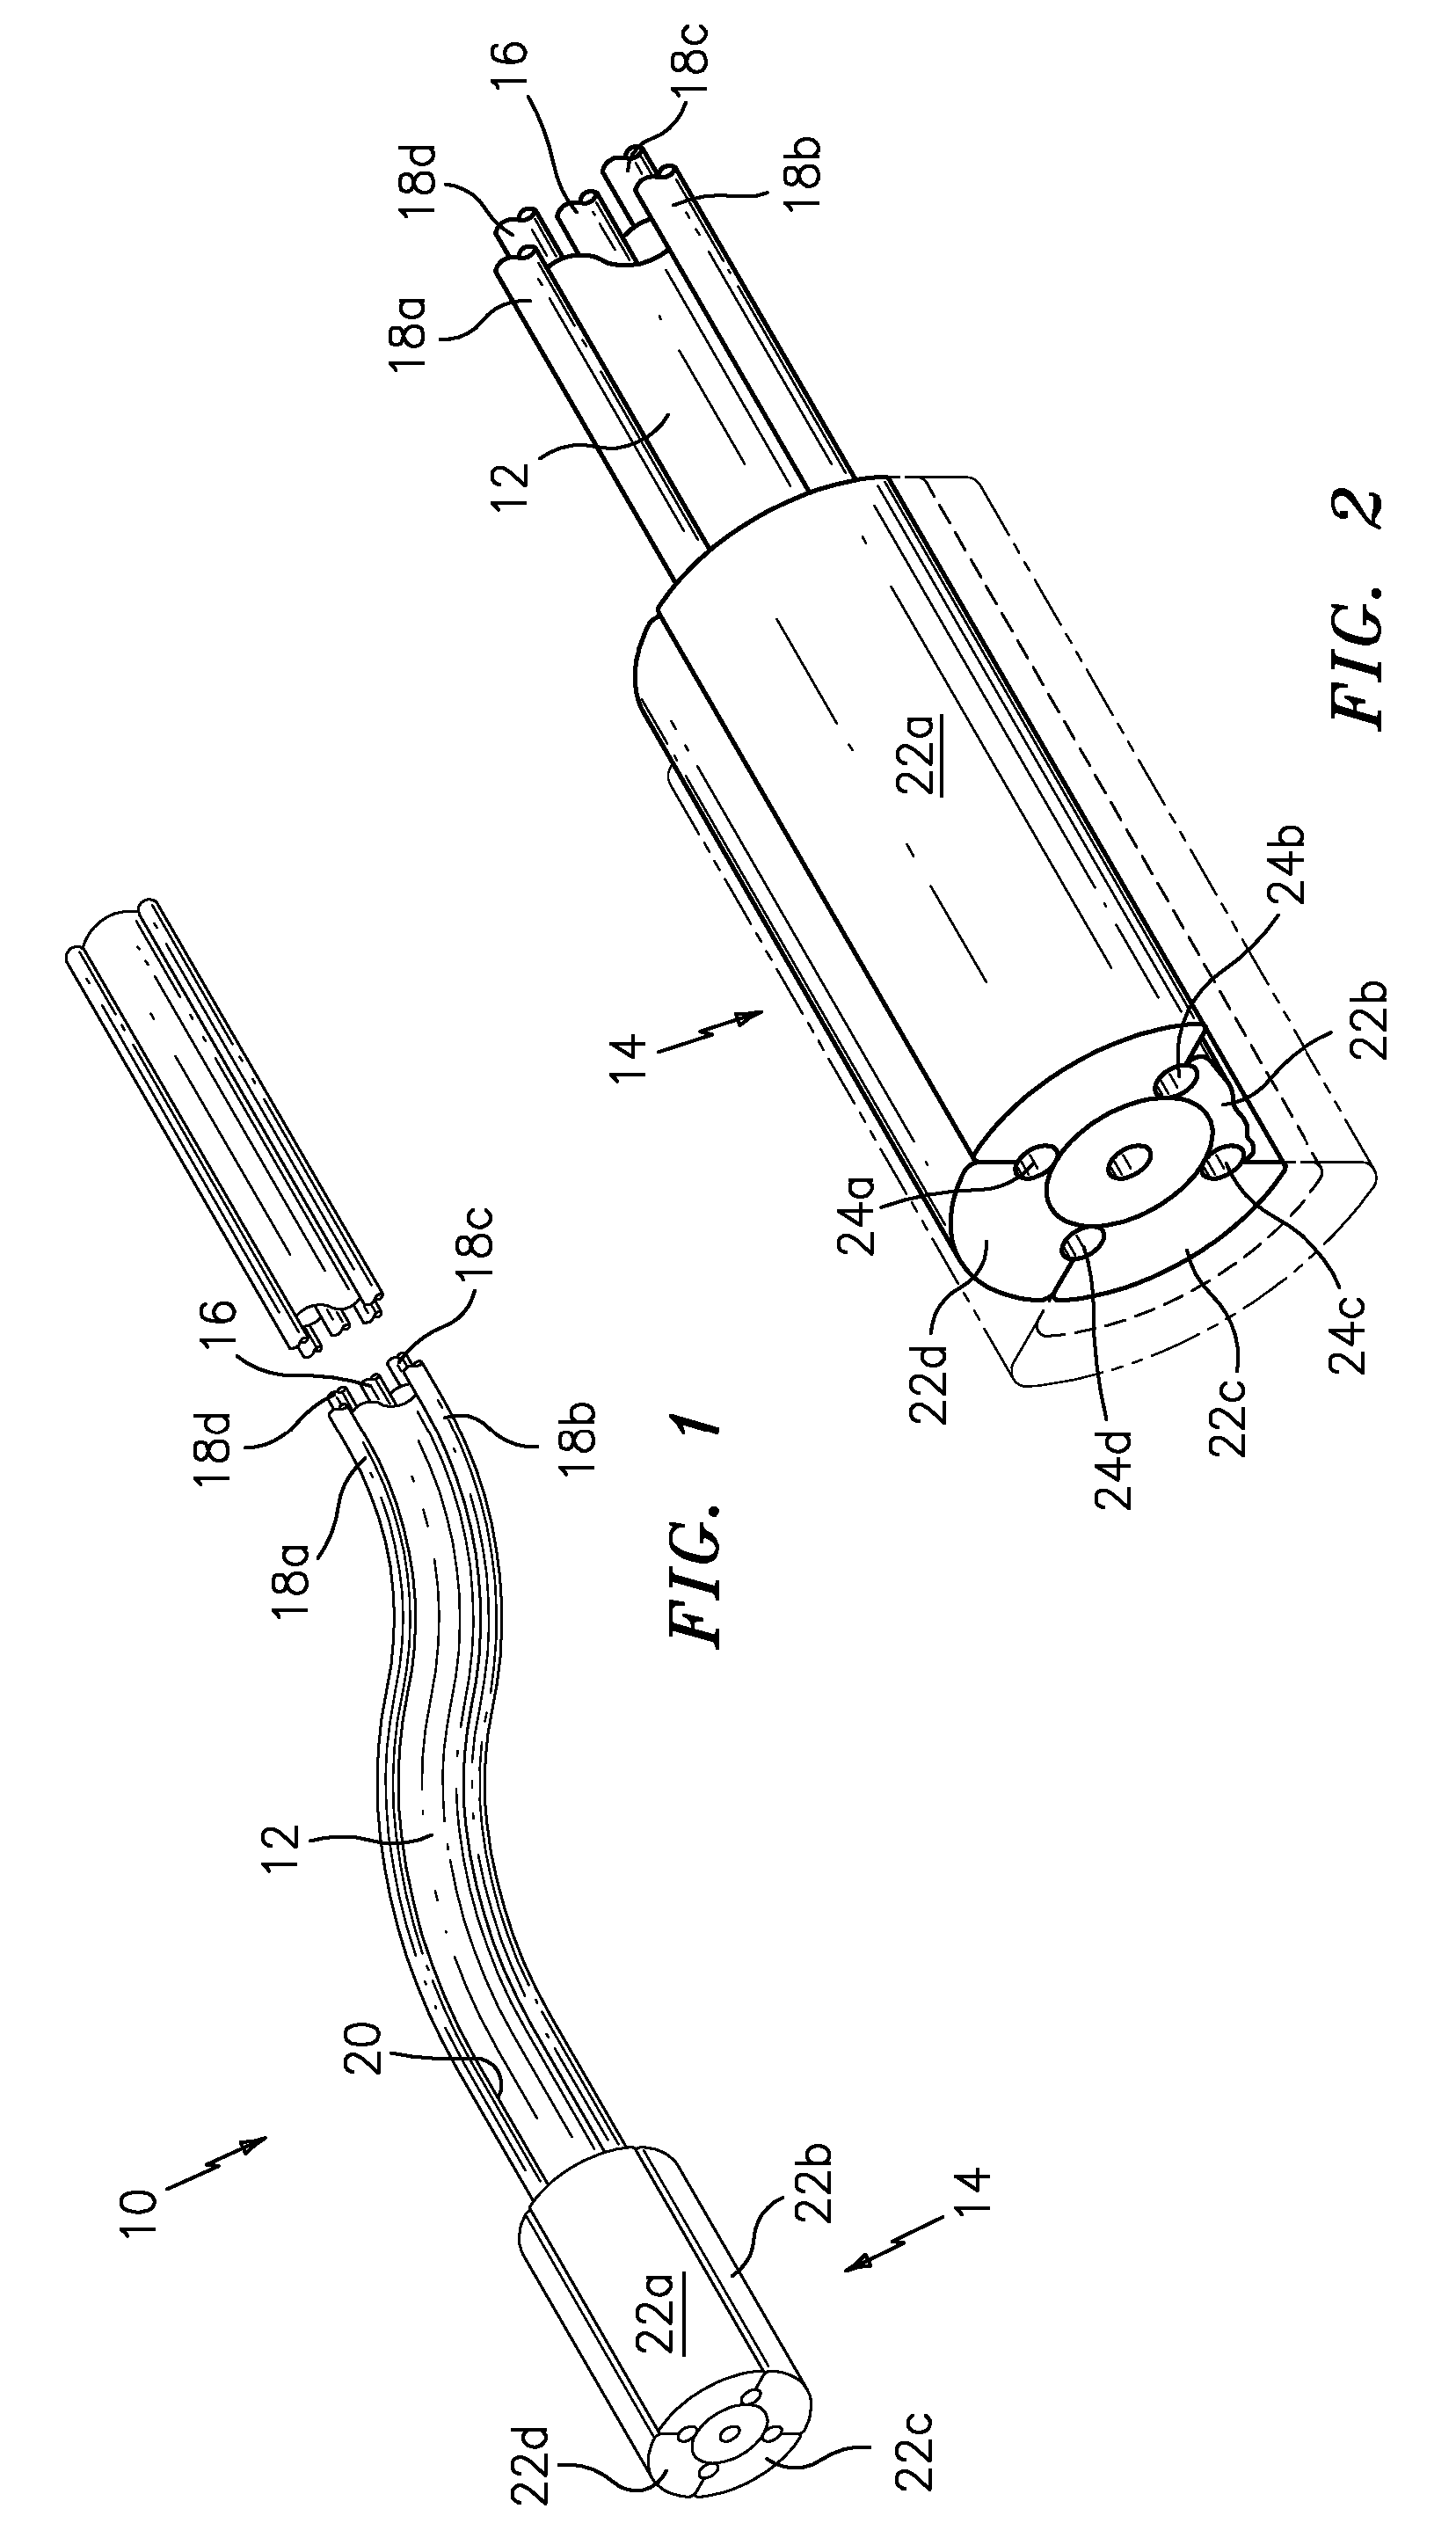 Balloon endoscope device